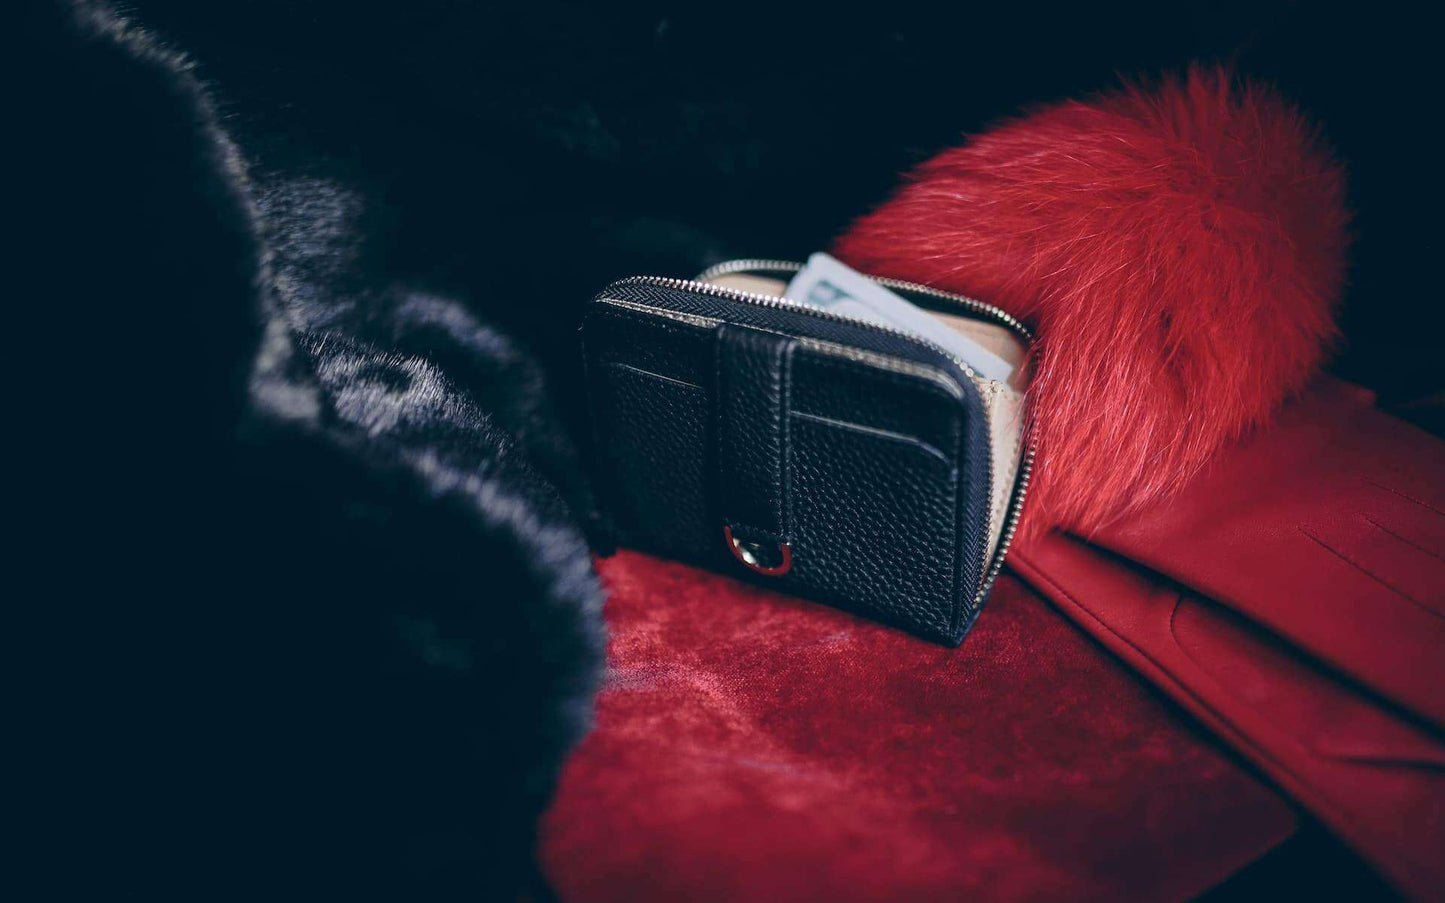 Durable wallet with elegant design